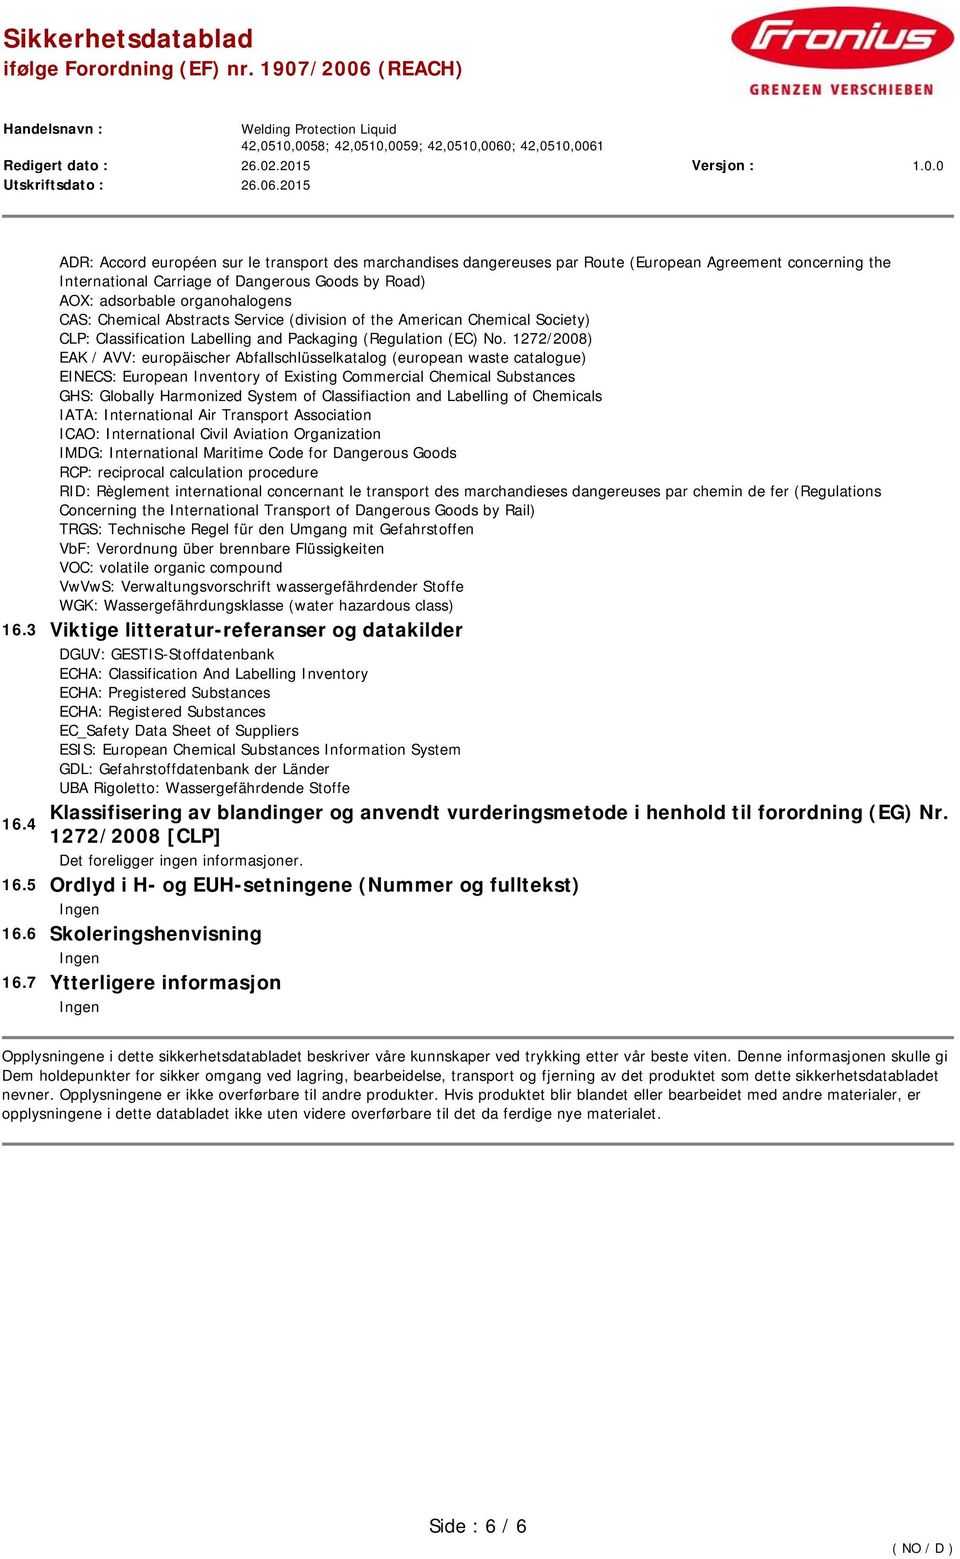 1272/2008) EAK / AVV: europäischer Abfallschlüsselkatalog (european waste catalogue) EINECS: European Inventory of Existing Commercial Chemical Substances GHS: Globally Harmonized System of